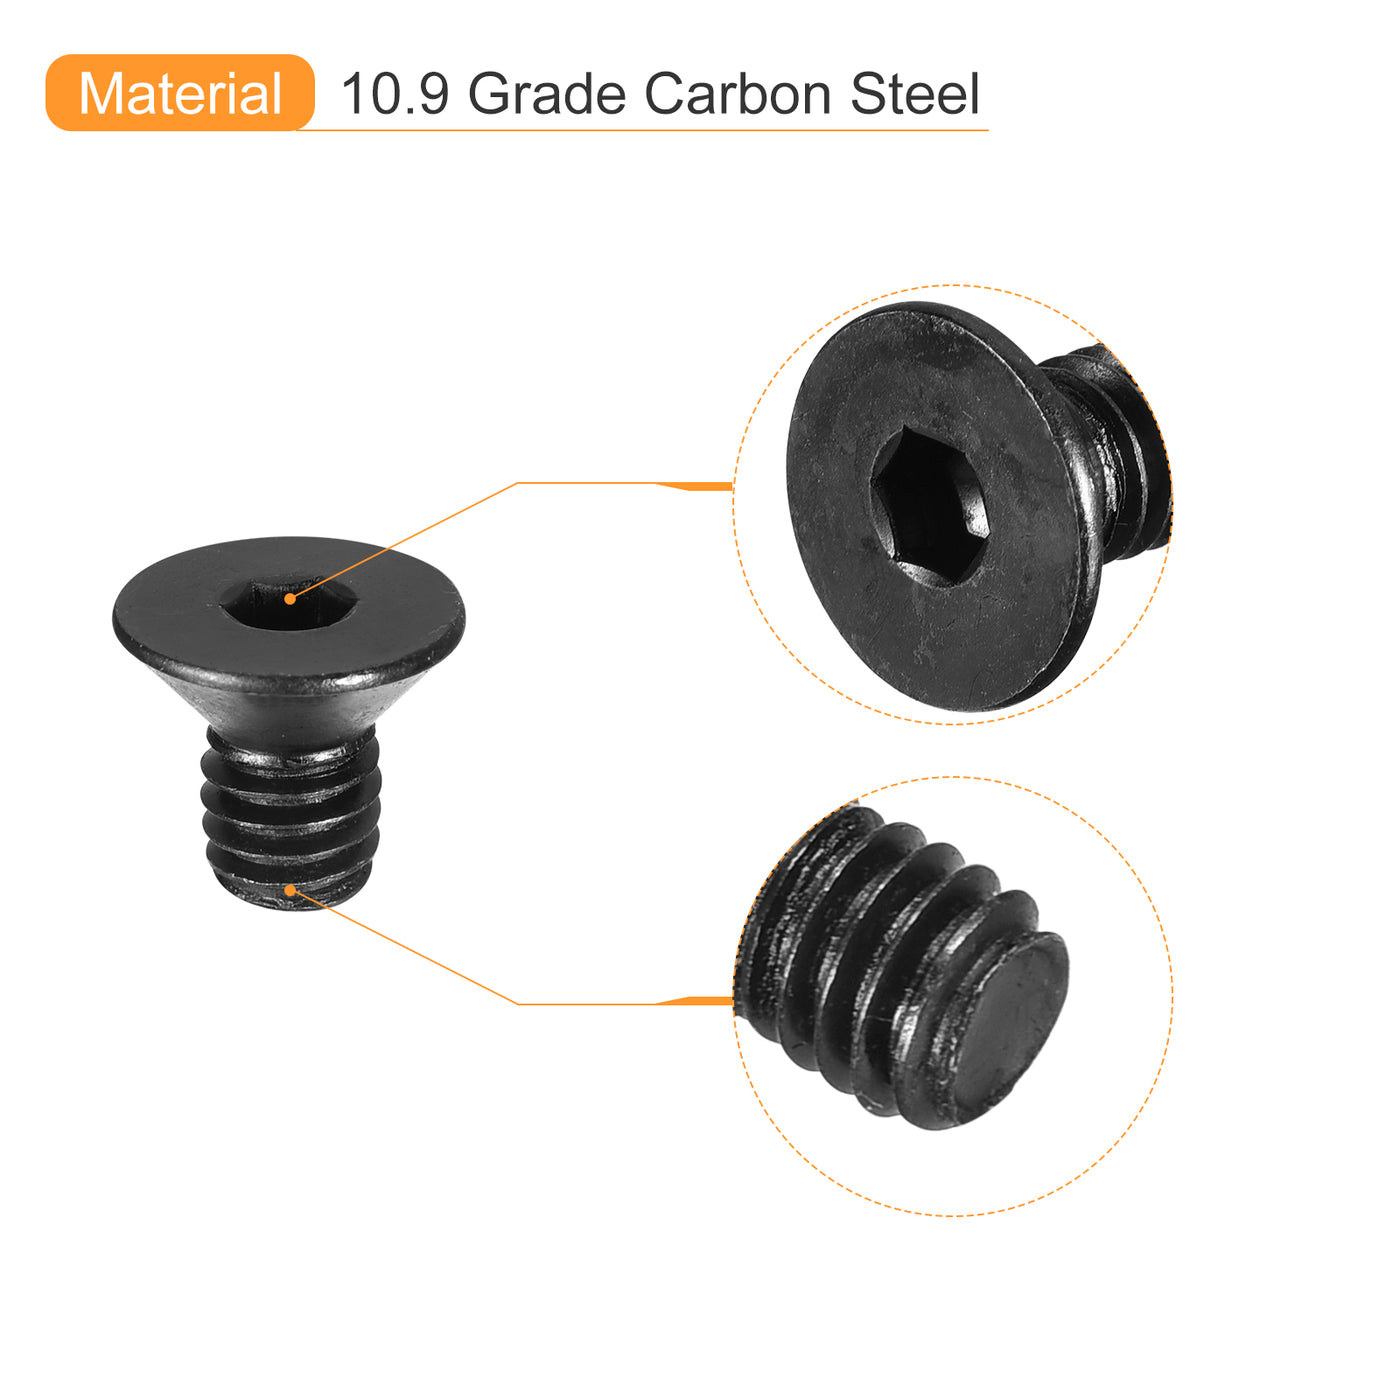 uxcell Uxcell 5/16-18x1/2" Flat Head Socket Cap Screws, 10.9 Grade Carbon Steel, 25PCS